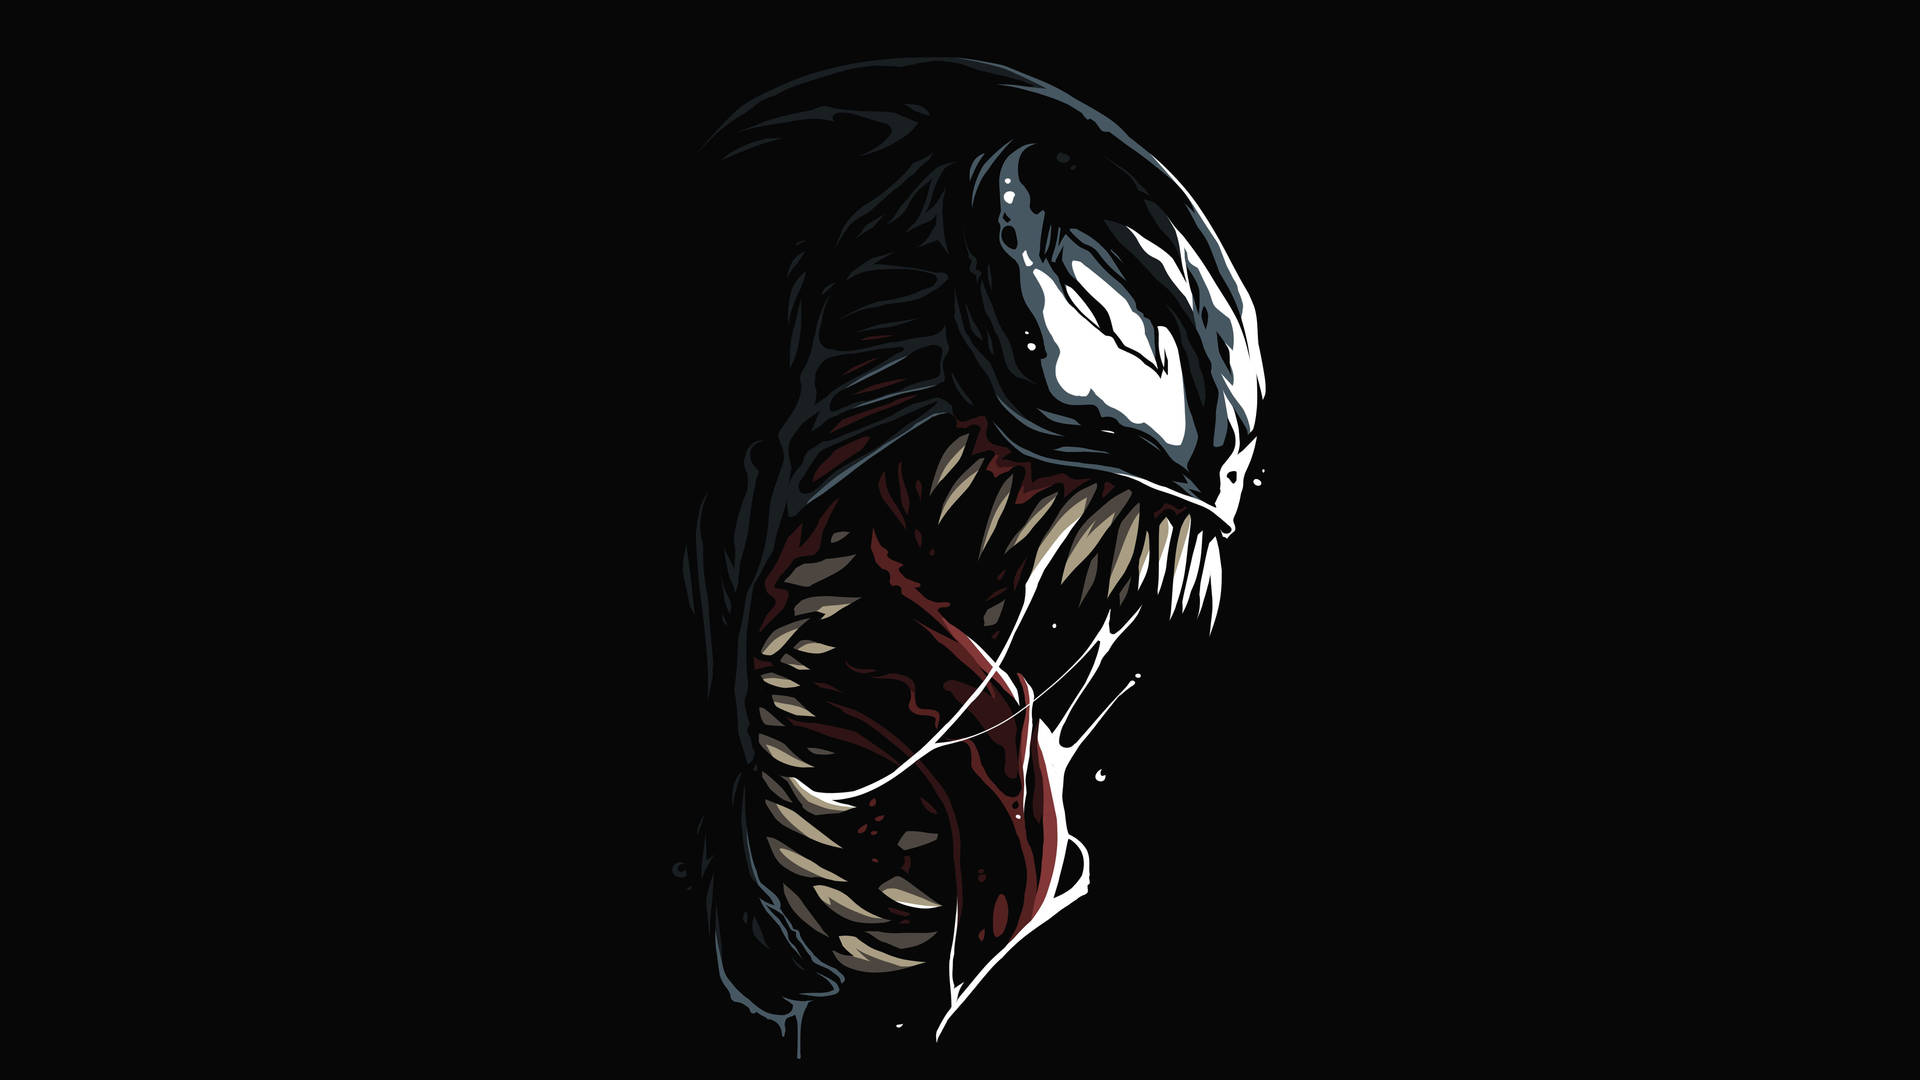 Free 4k Ultra Hd Venom Wallpaper Downloads, [100+] 4k Ultra Hd Venom  Wallpapers for FREE 